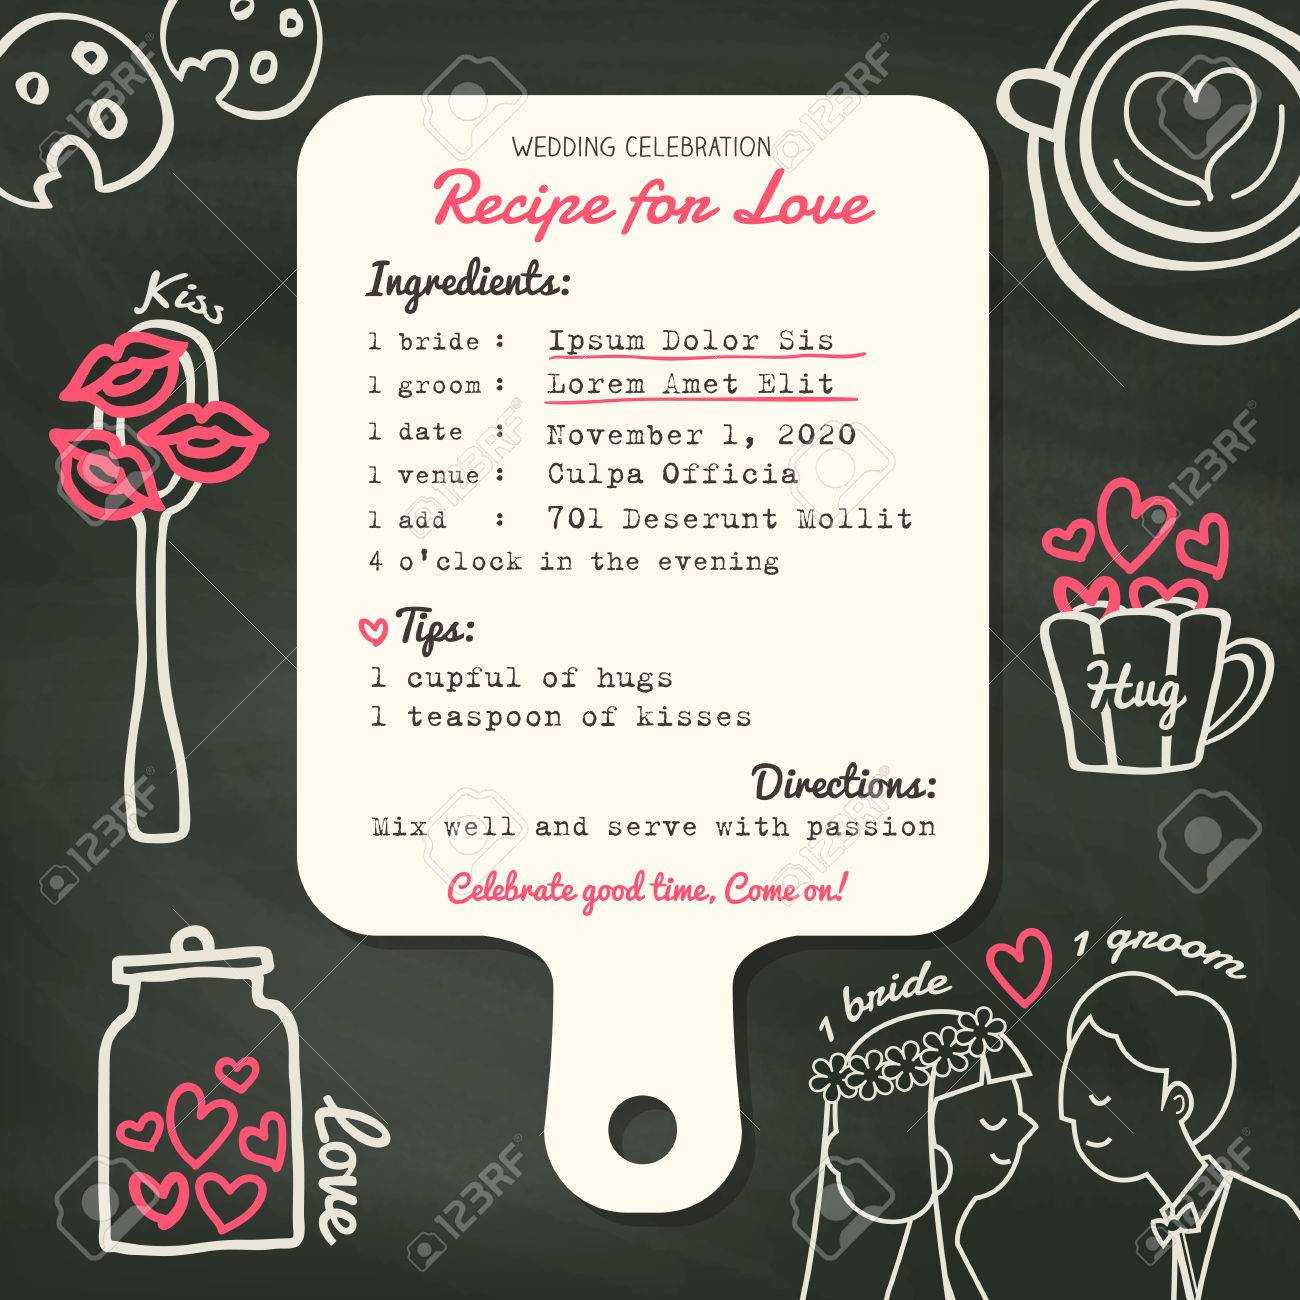 Recipe Card Creative Wedding Invitation Design Template With.. Throughout Recipe Card Design Template